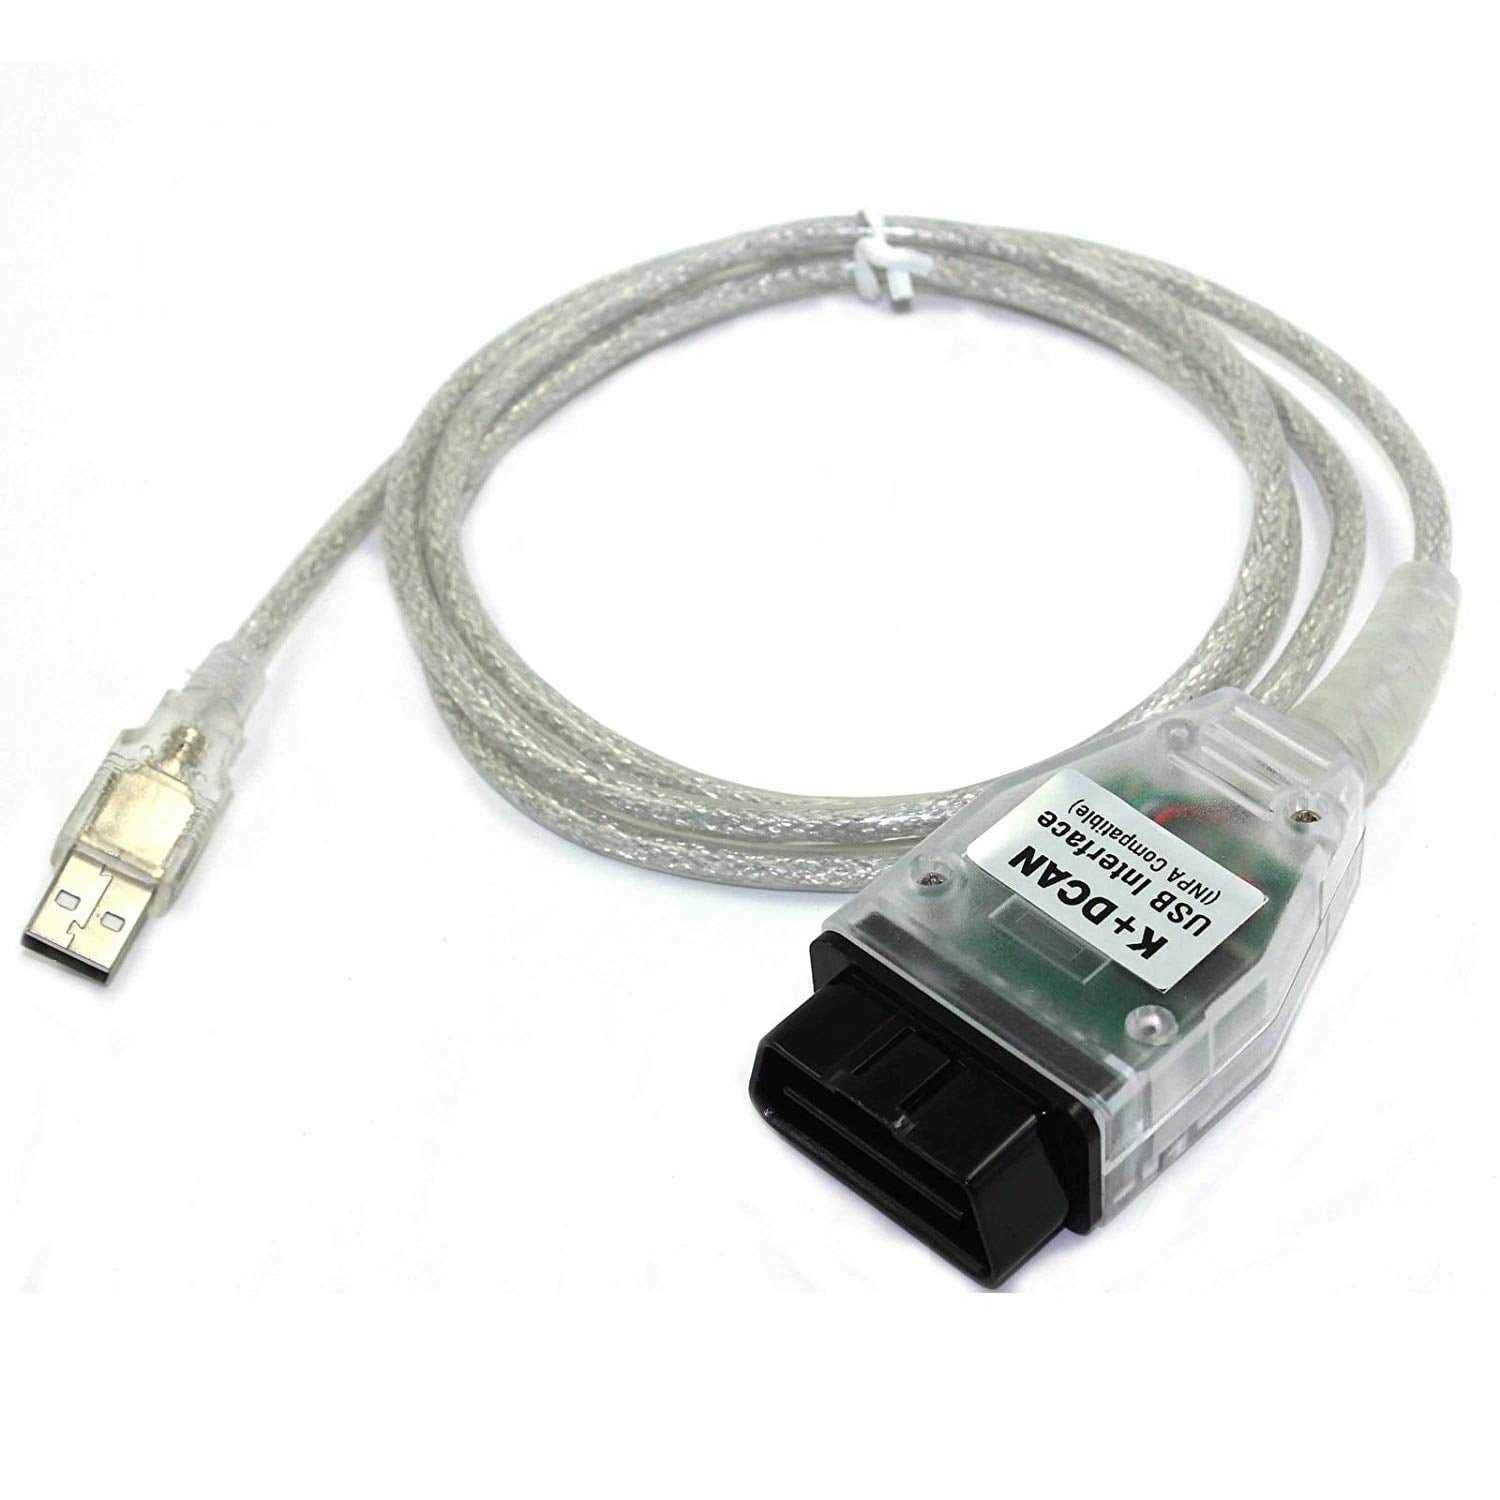 INPA/Ediabas K+D-CAN DCAN USB Interface OBD2 EOBD Diagnostic Tool Cable for BMW 